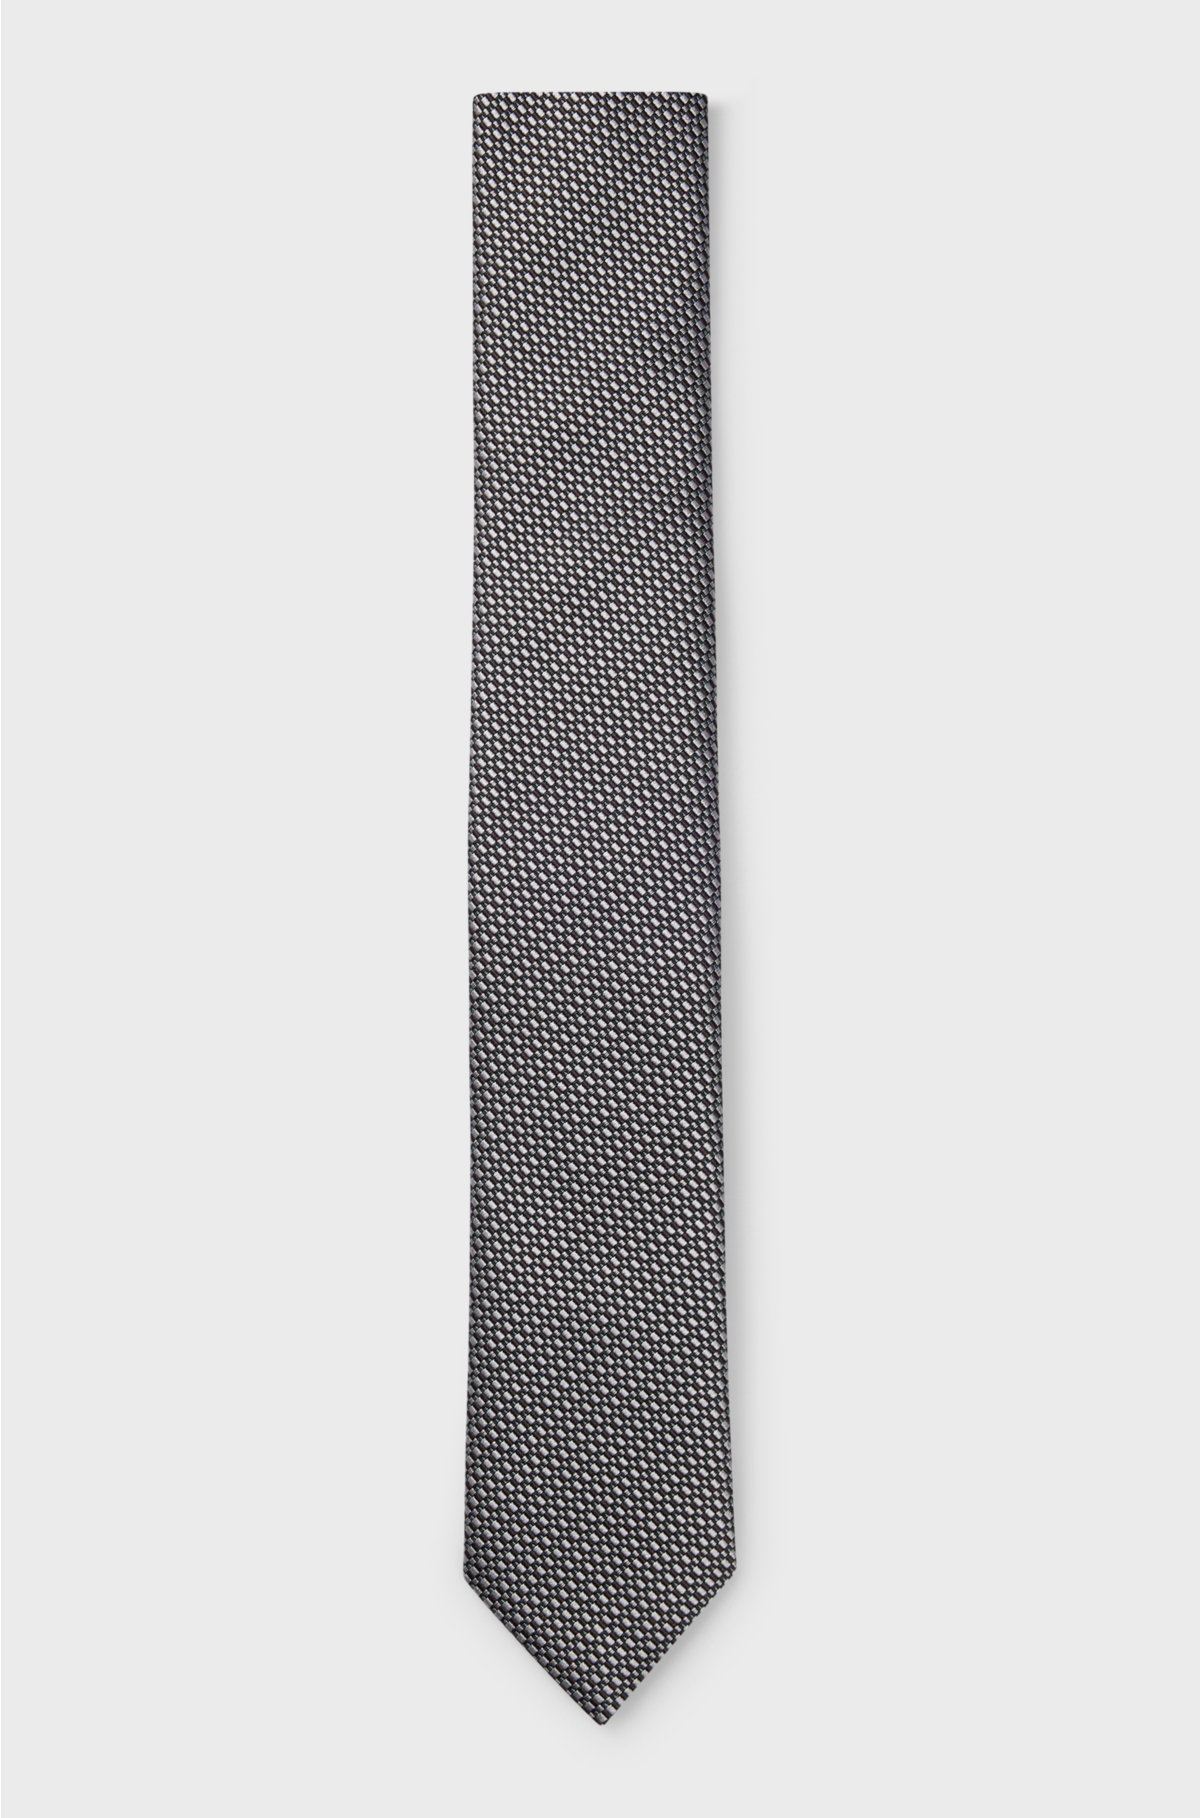 Silk-blend tie with jacquard pattern, Grey